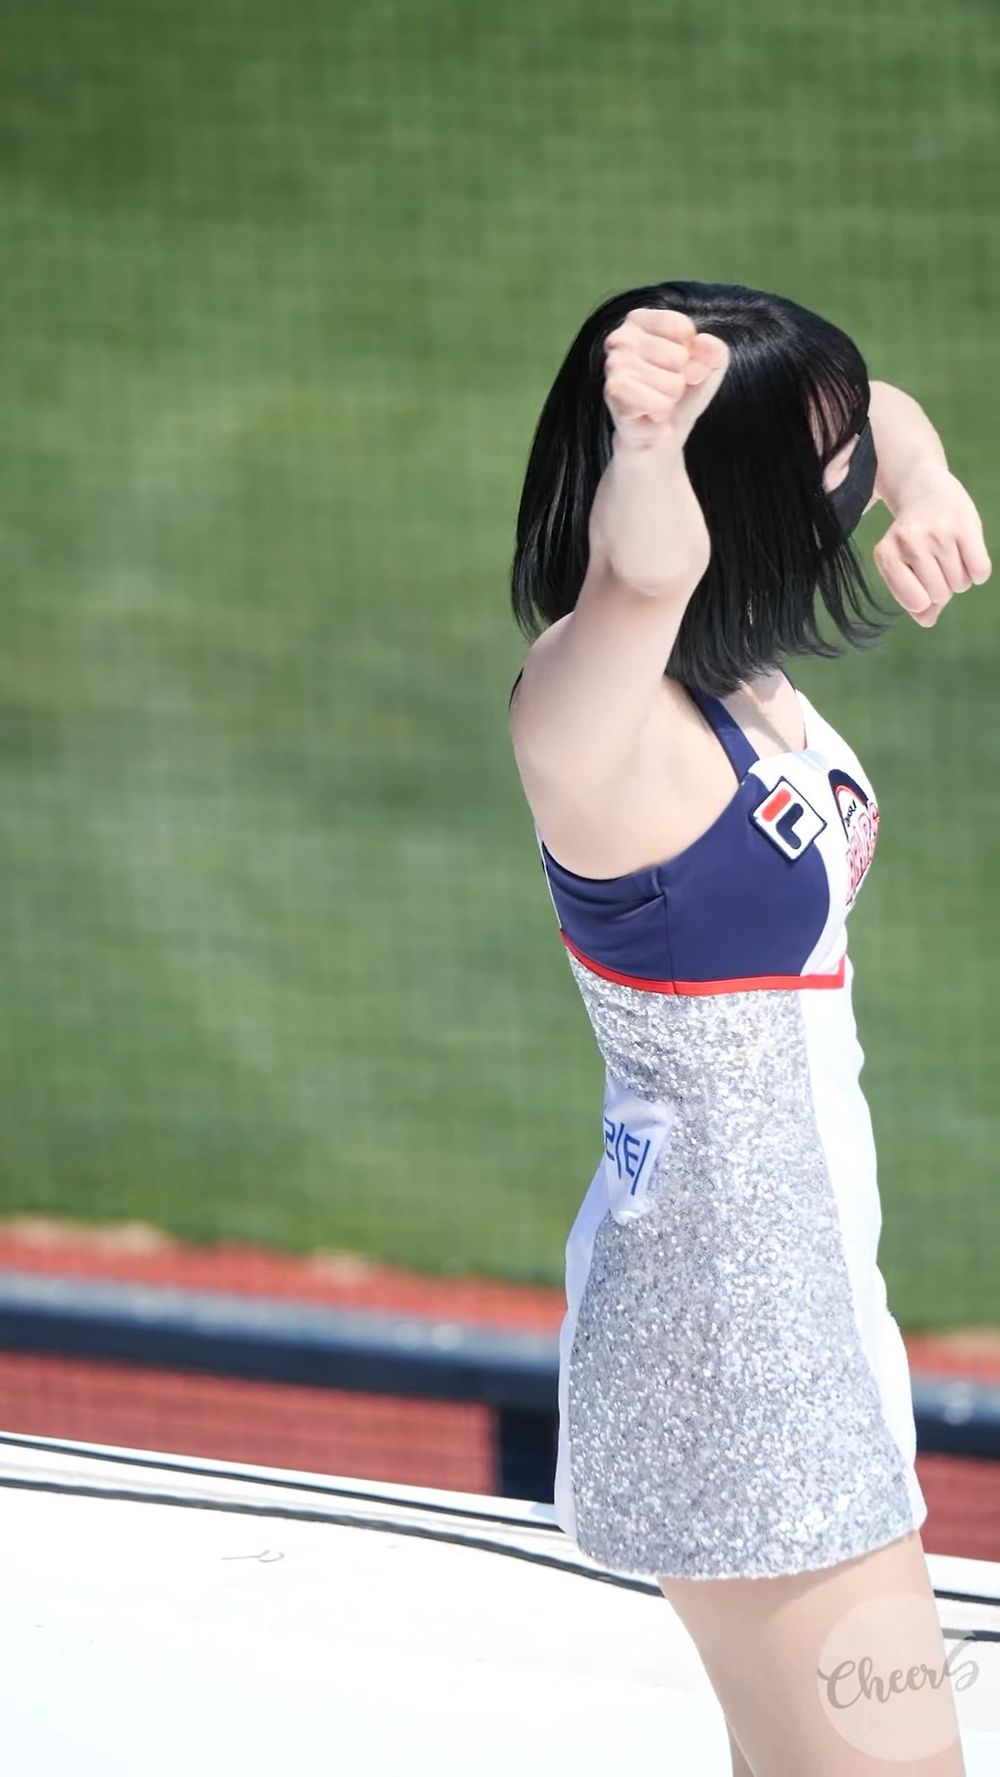 [4K] Savage 박성은 치어리더 직캠 Park Seongeun Cheerleader fancam 두산베어스 220521.mkv_20220525_110622.306.jpg